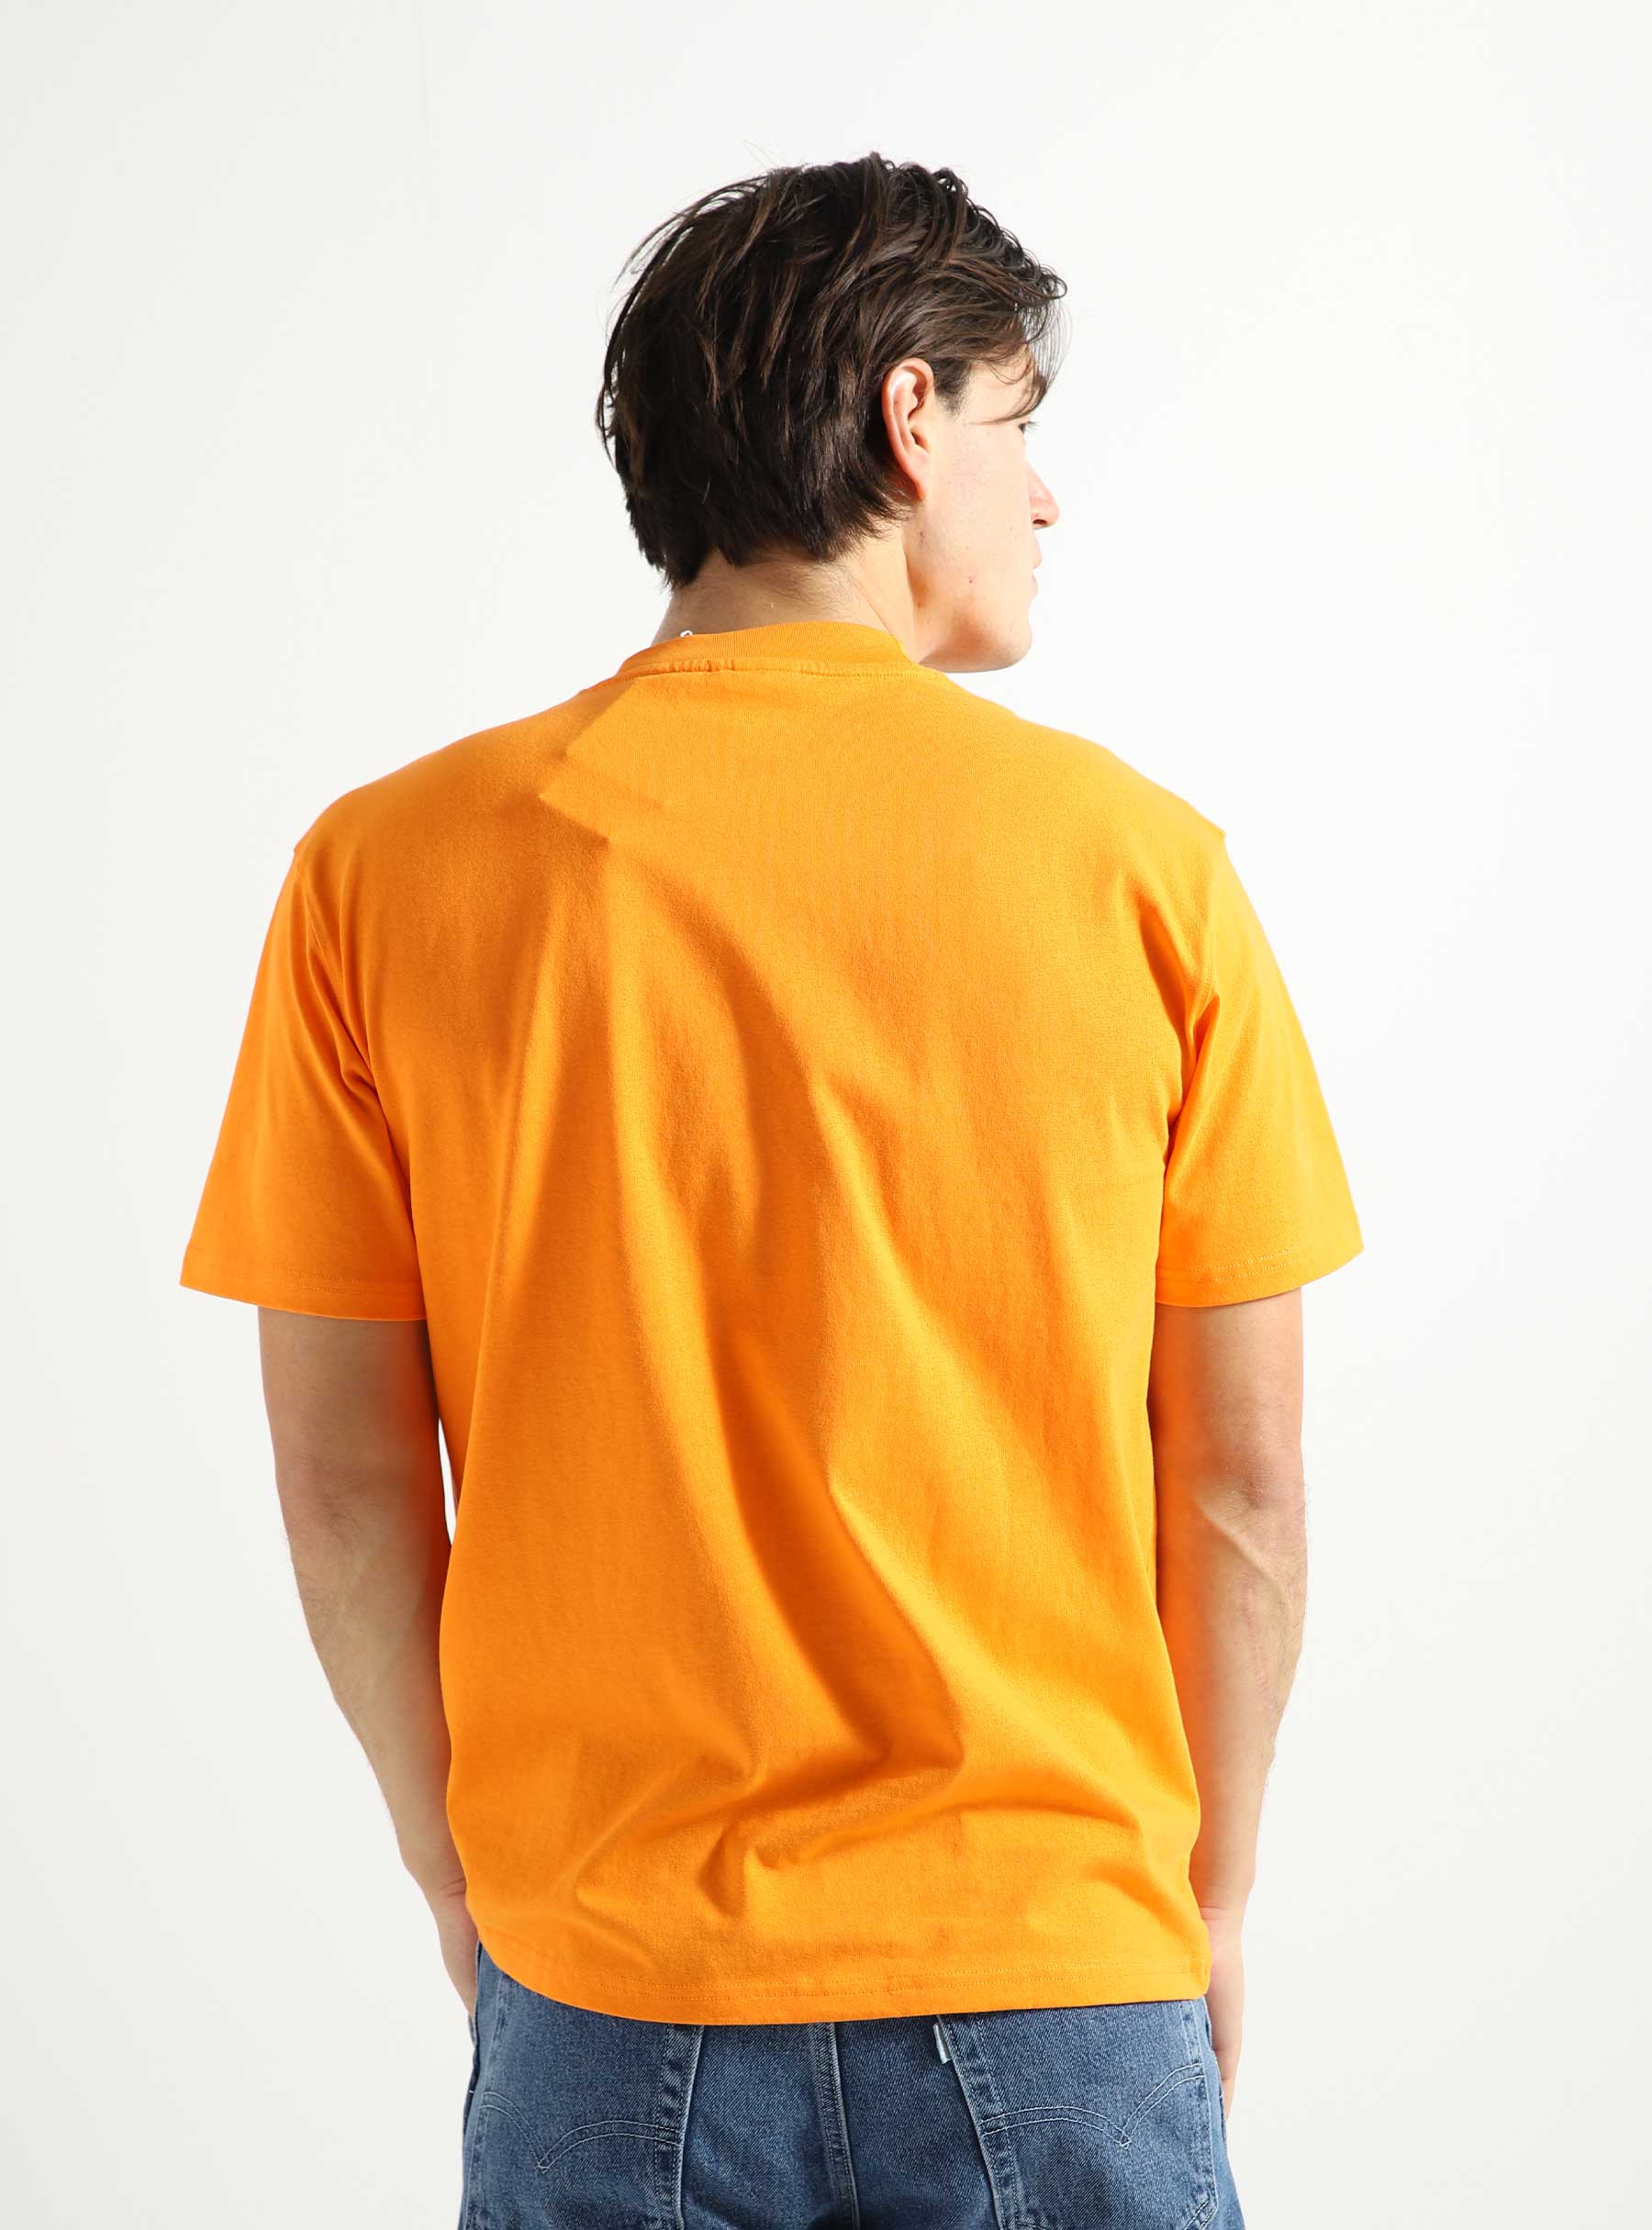 Puma - Typo Pleasures Orange Freshcotton T-shirt Puma x